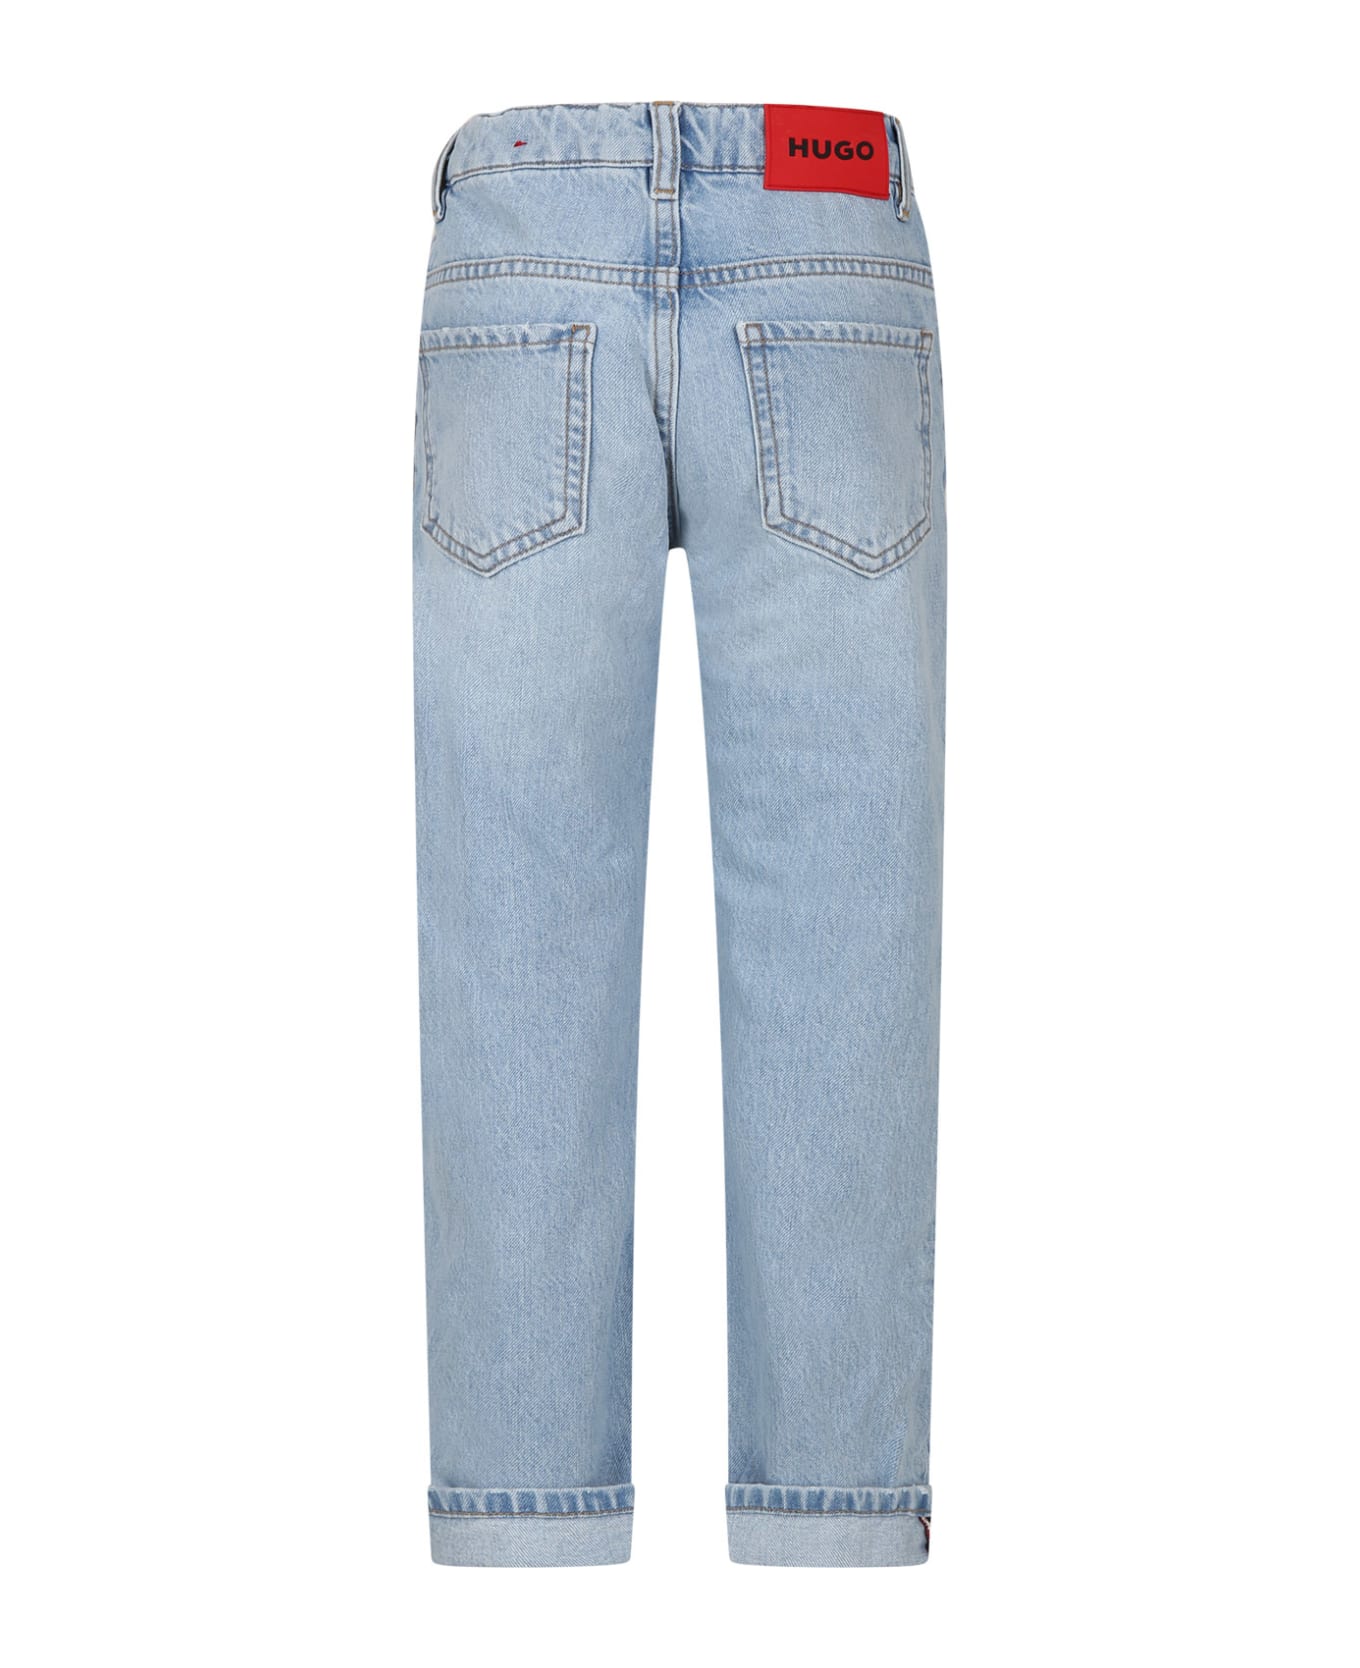 Hugo Boss Denim Jeans For Boy With Logo - Denim